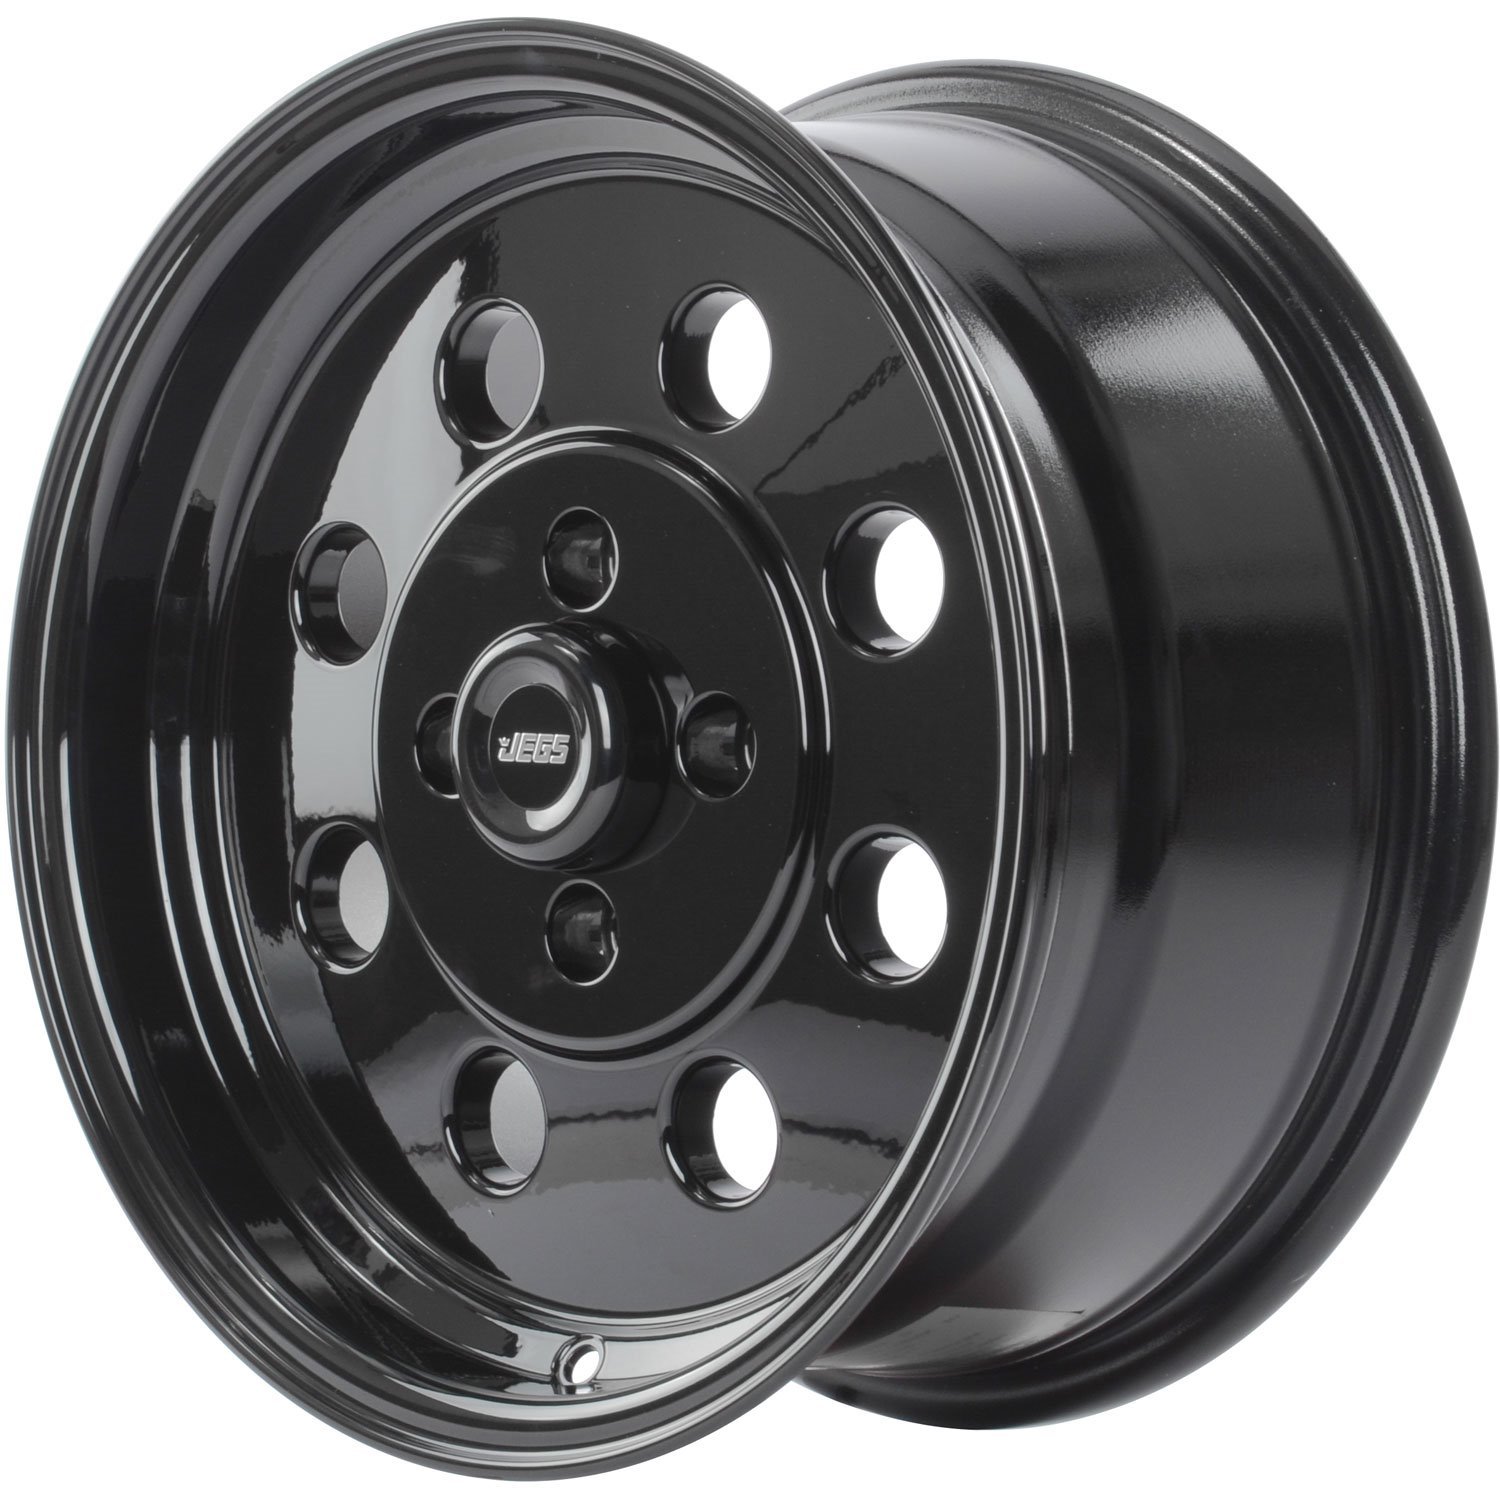 Sport Lite 8-Hole Wheel [Size: 15" x 7"] Black